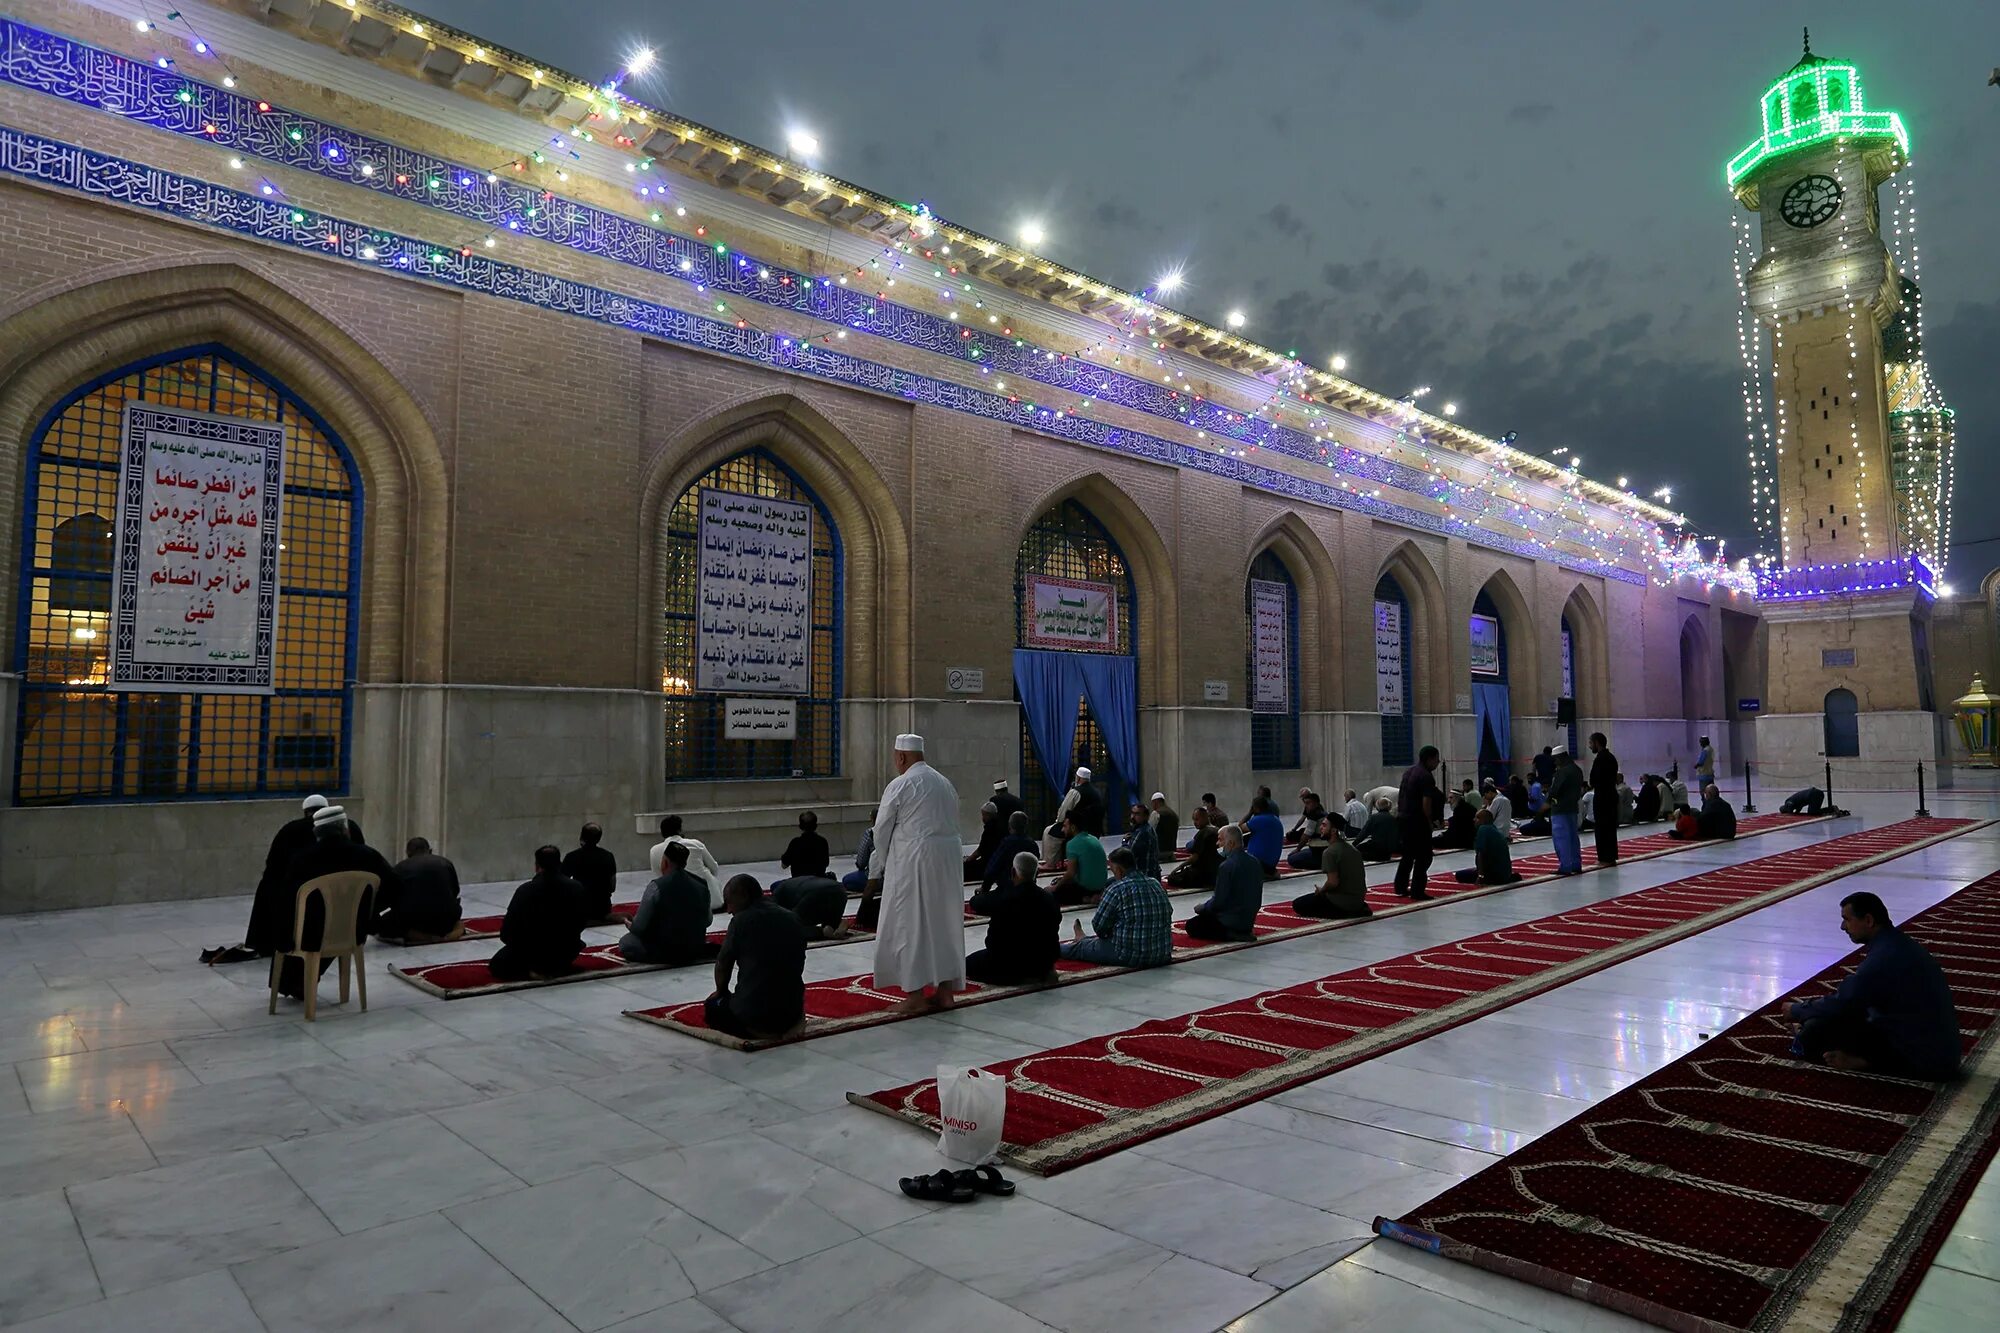 Абдул-Кадира Аль-Джилани мечеть. Пост у мусульман. Рамадан в Москве 2012. Рамадан в Дубае. Когда начинается пост у мусульман и заканчивается